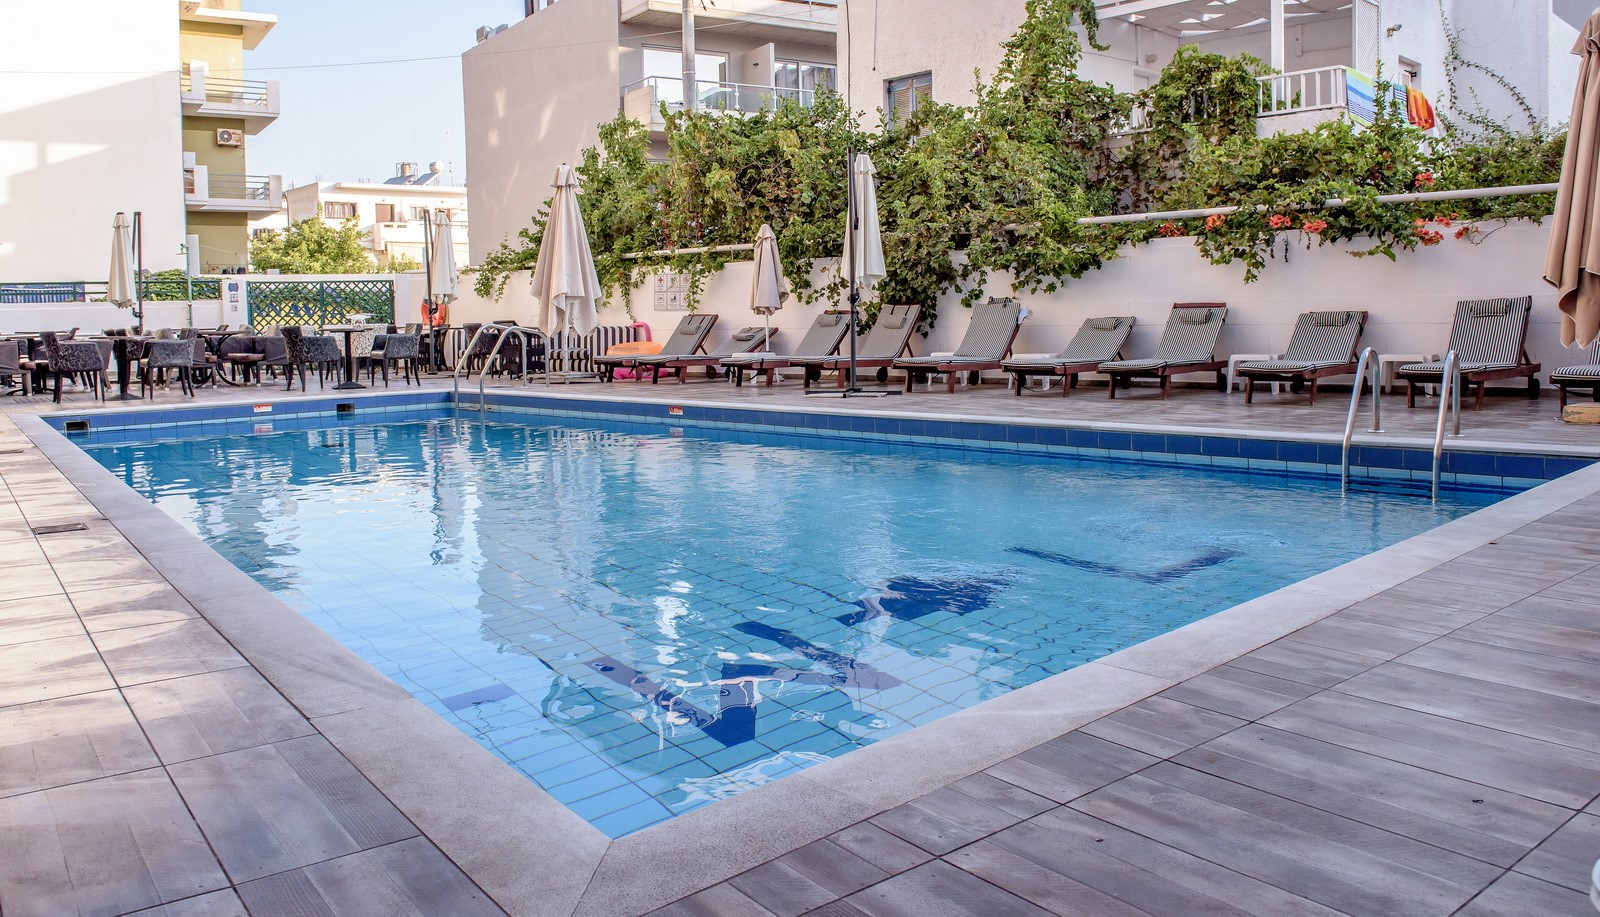 Pela Maria Hotel - Χερσόνησος, Κρήτη ✦ 2 Ημέρες (1 Διανυκτέρευση) ✦ 2 άτομα ✦ All Inclusive ✦ 15/04/2022 έως 30/09/2022 ✦ Υπέροχη Τοποθεσία!